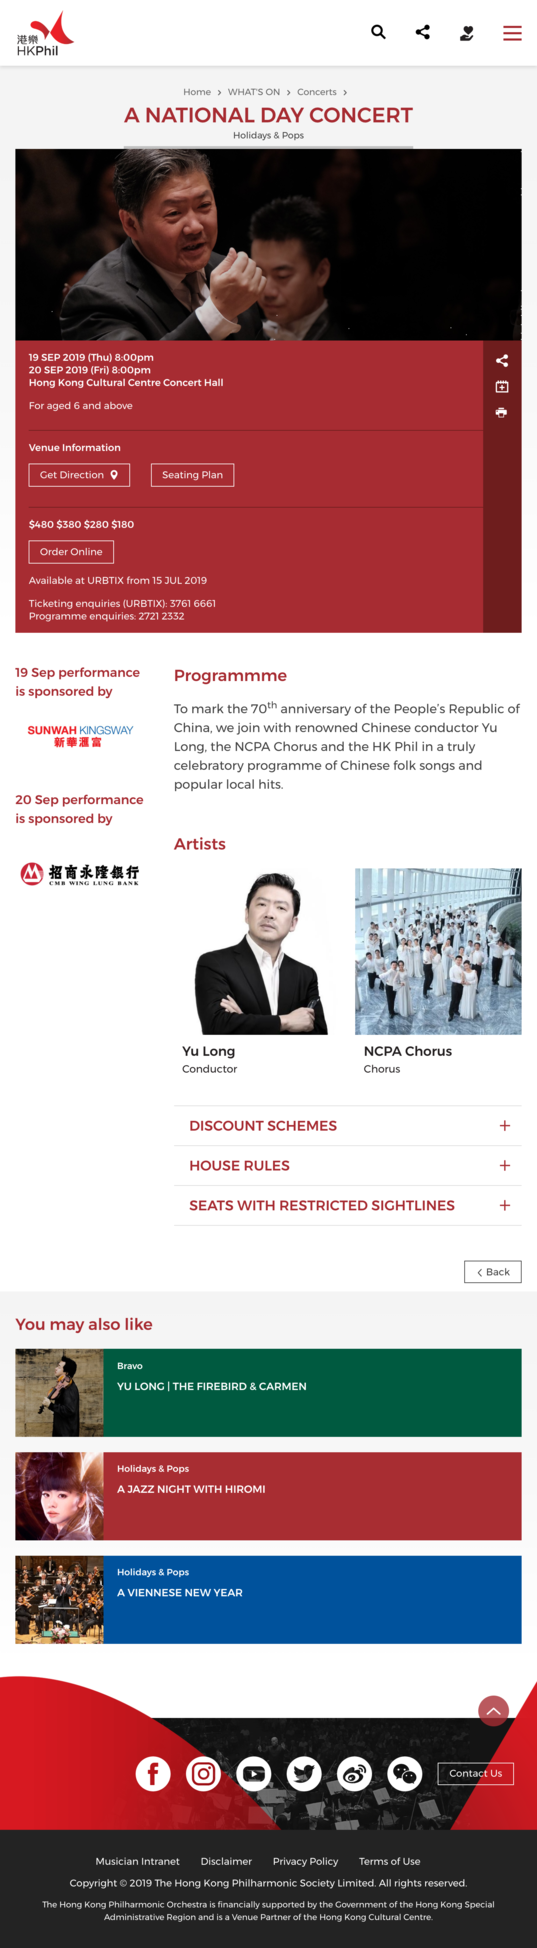 Hong Kong Philharmonic  website screenshot for tablet version 3 of 4